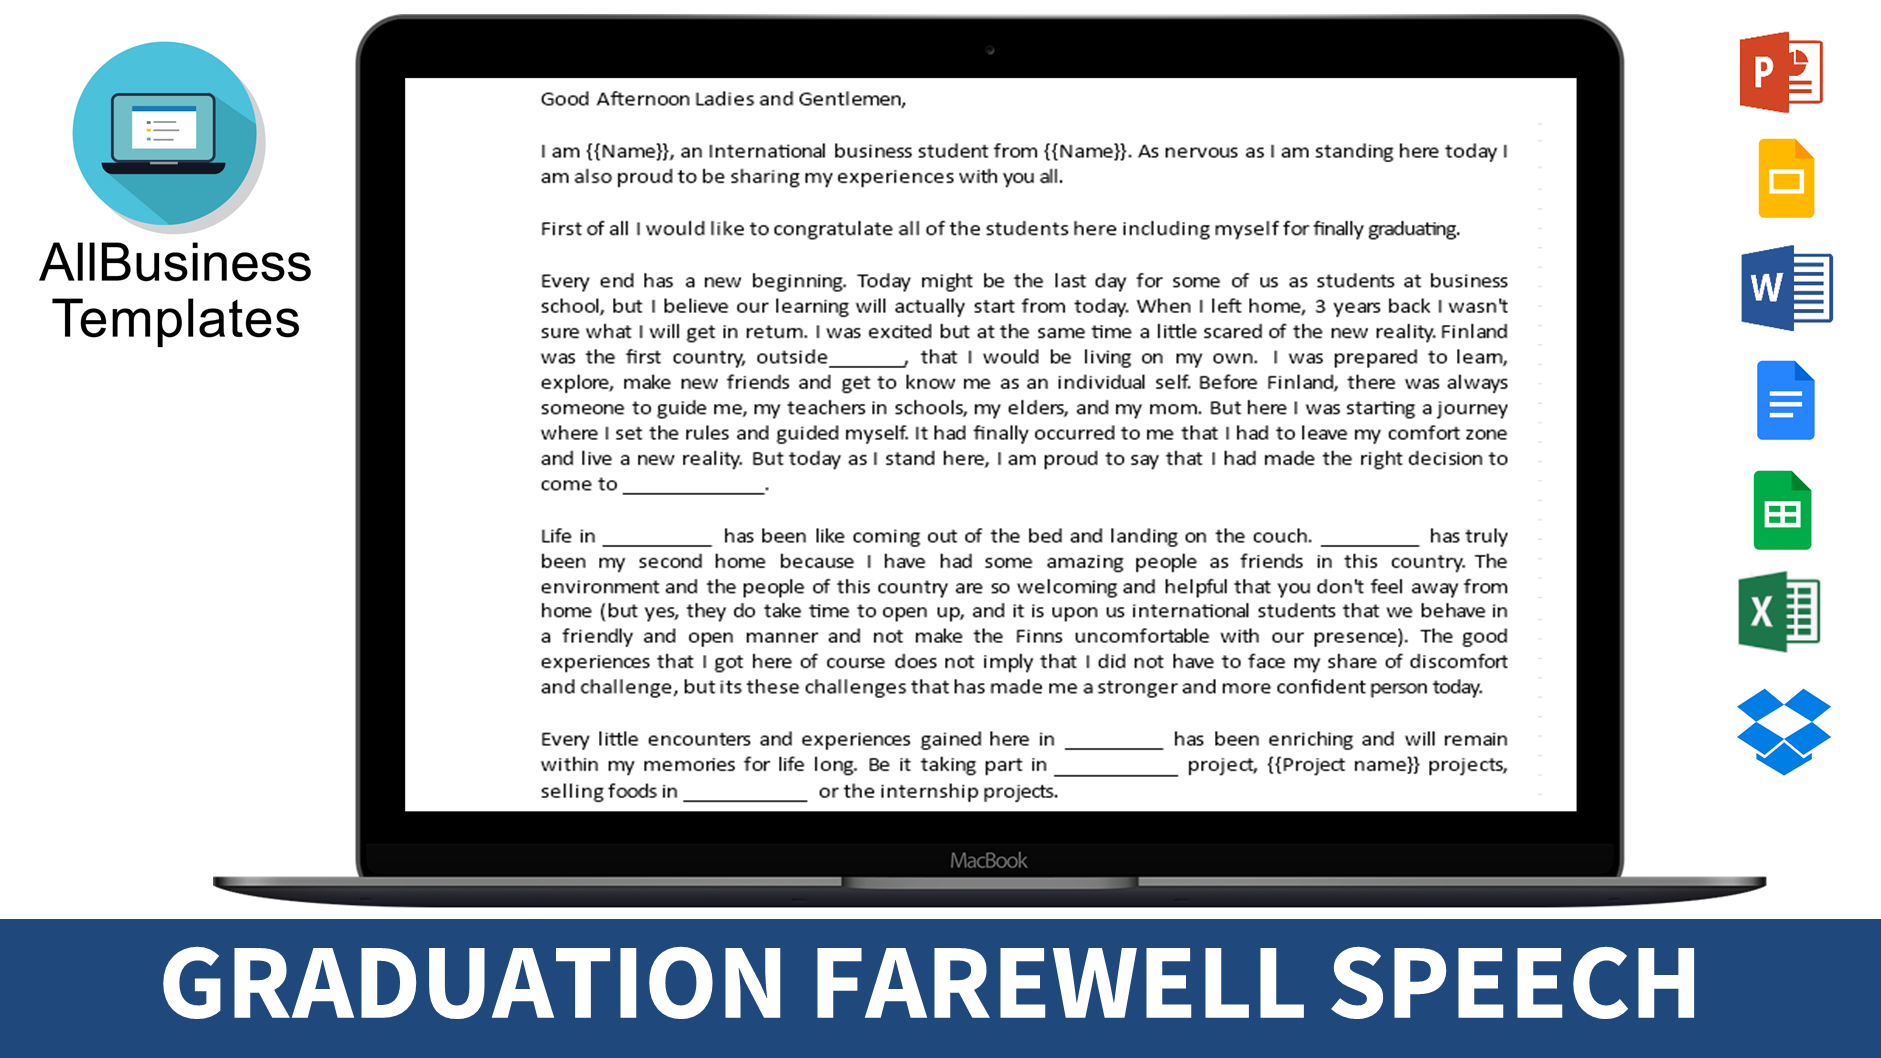 graduation farewell speech plantilla imagen principal